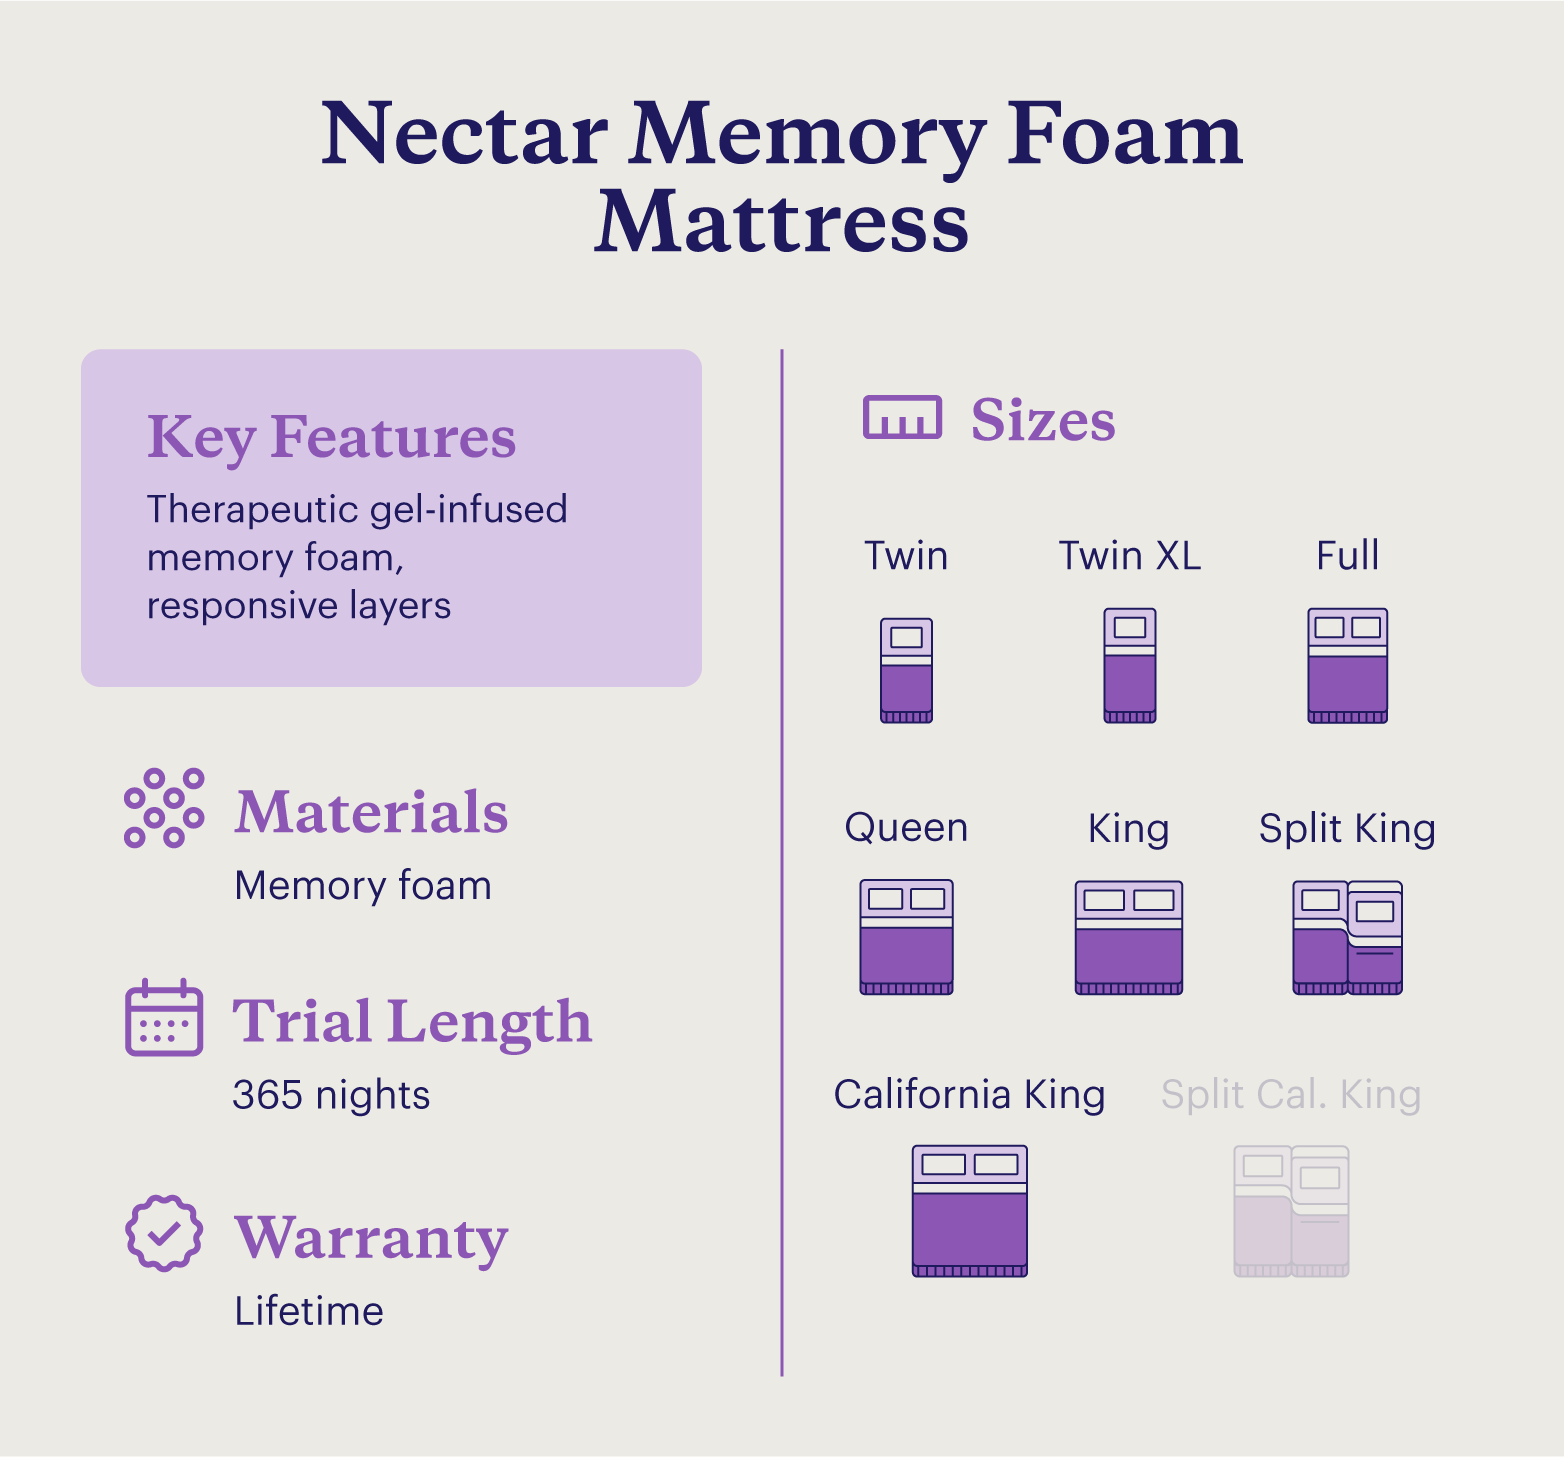 A chart showing information about Nectar Memory Foam Mattress.